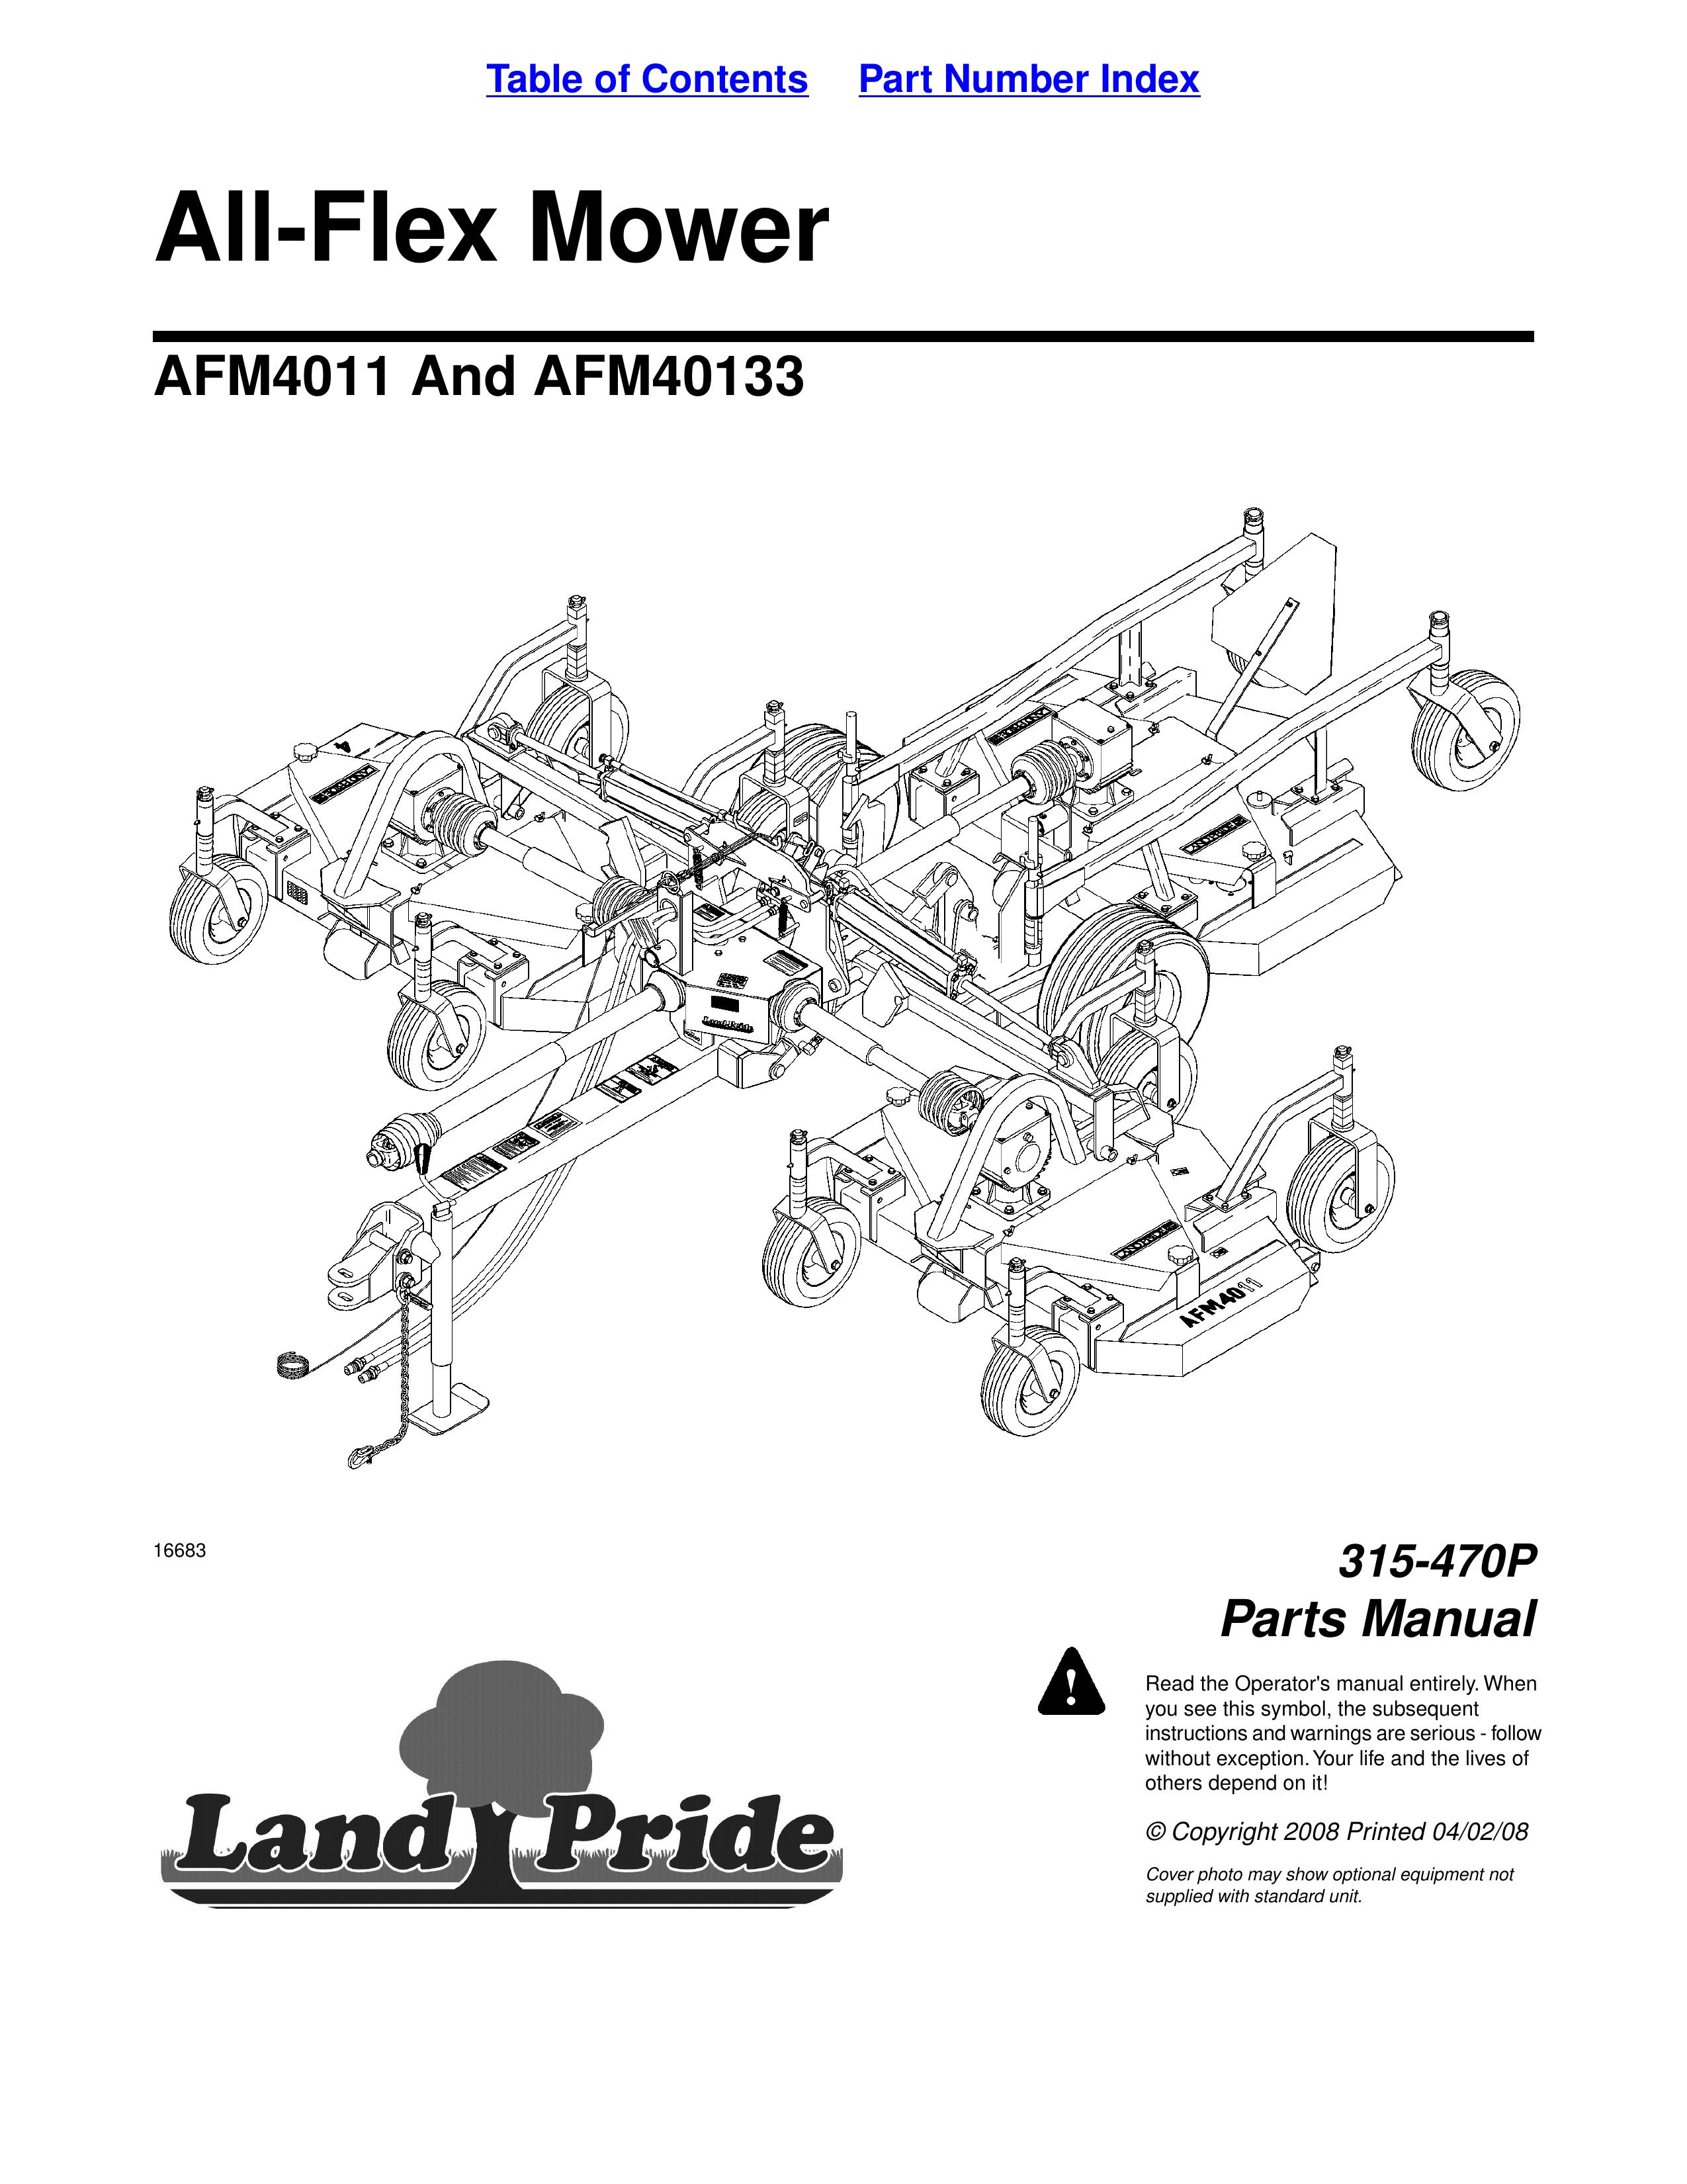 Land Pride AFM4011 Lawn Mower User Manual